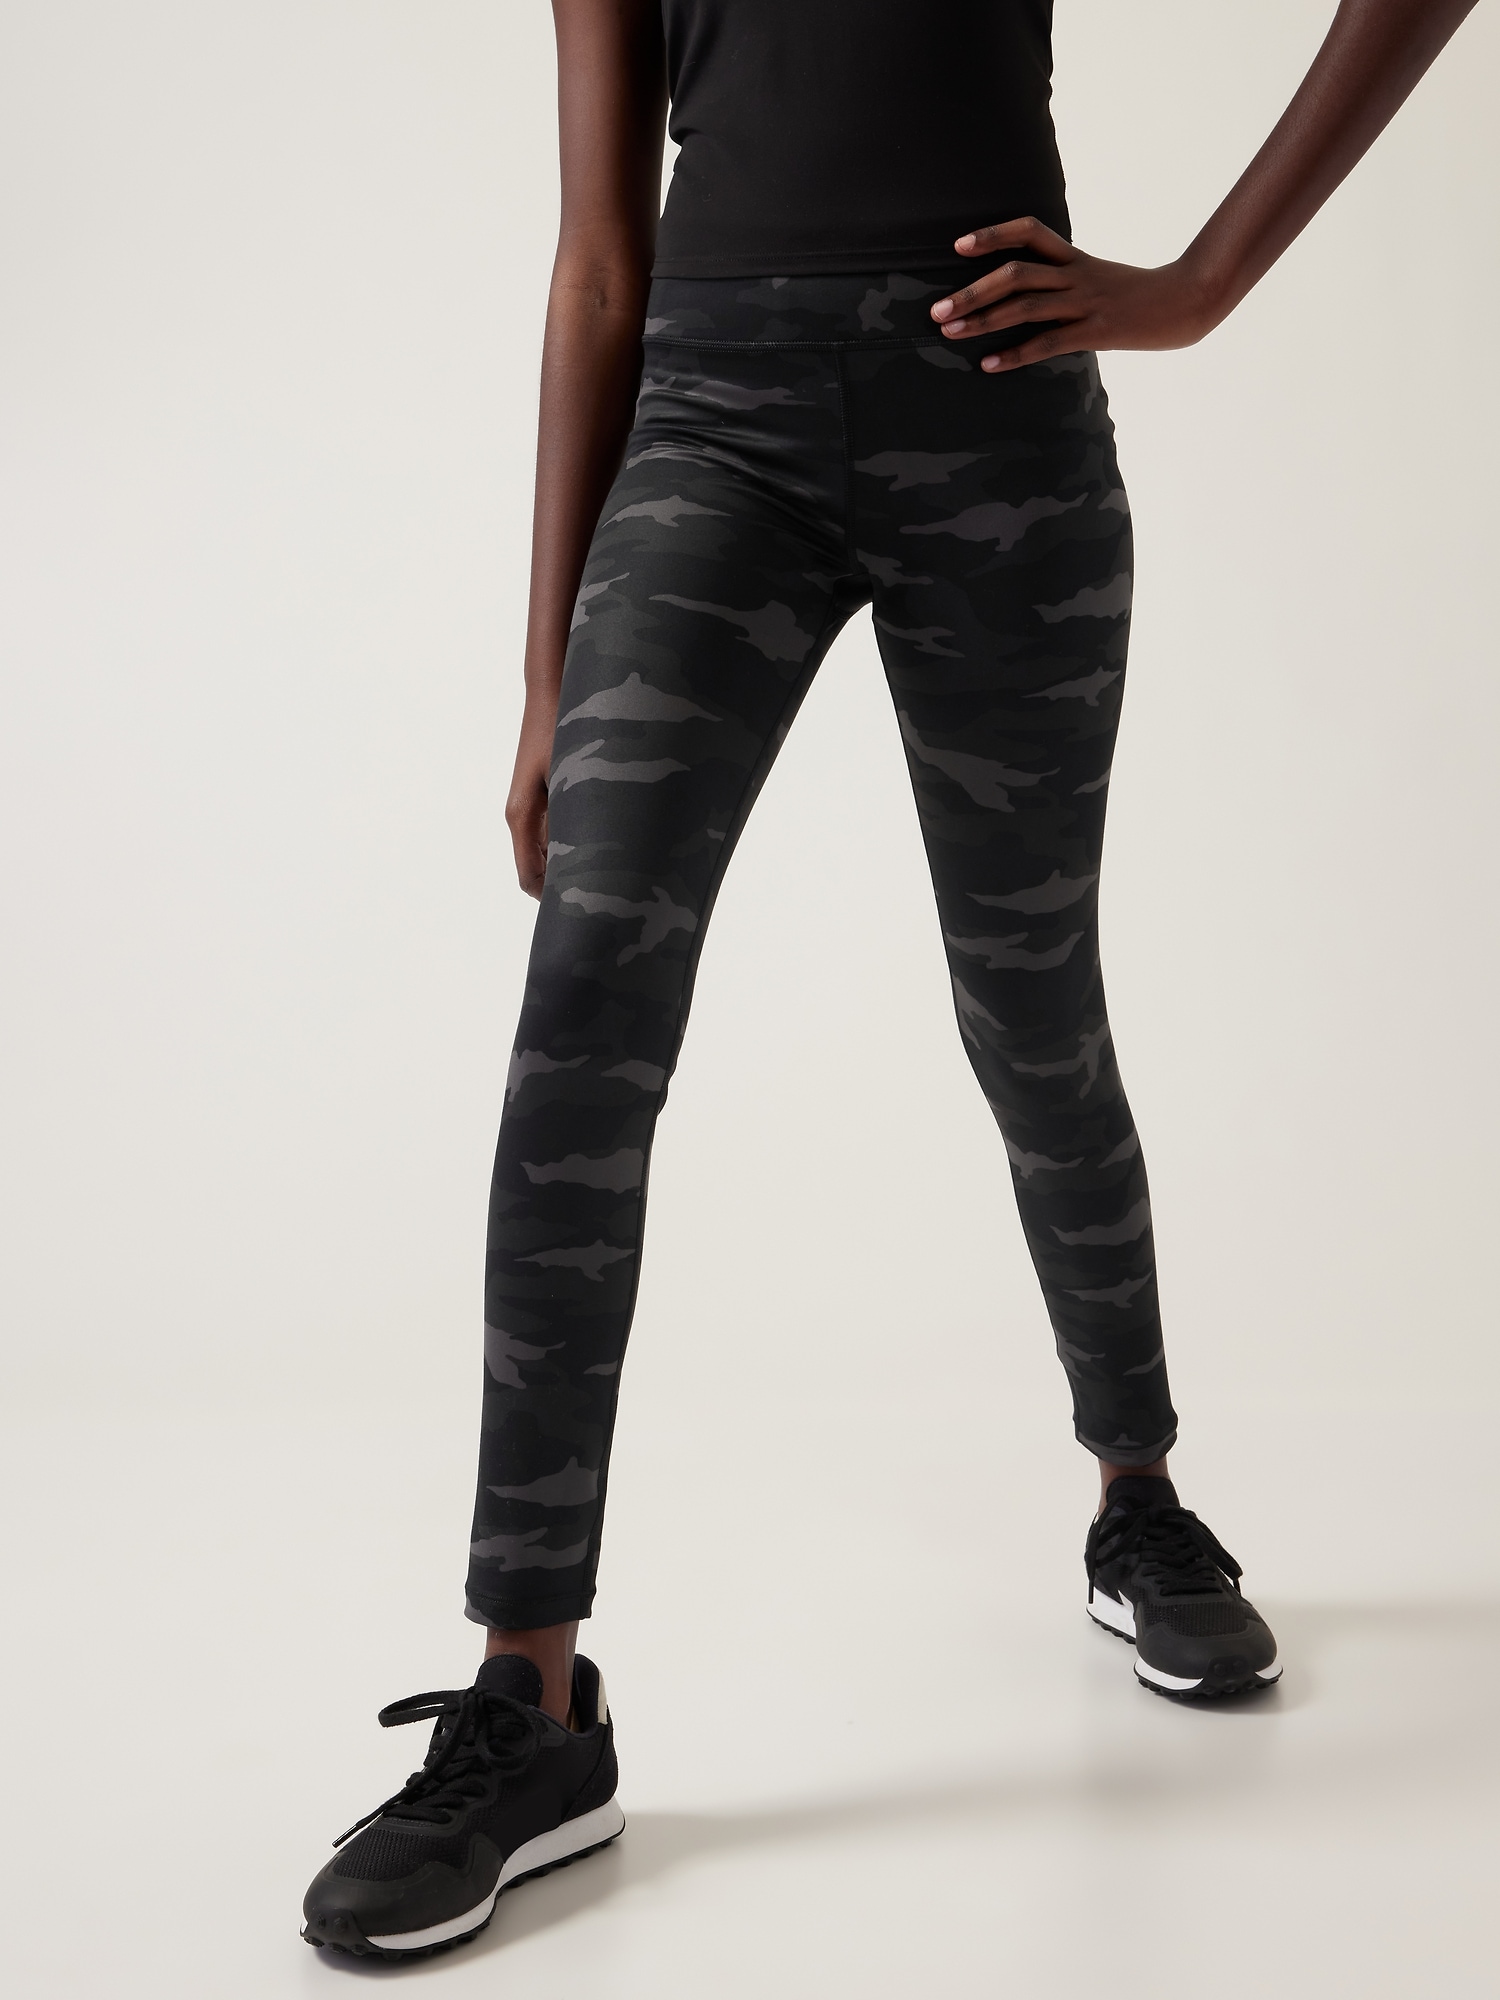 Athleta Girl Leggings Girls Black Athletic Pants Size M (8-10)